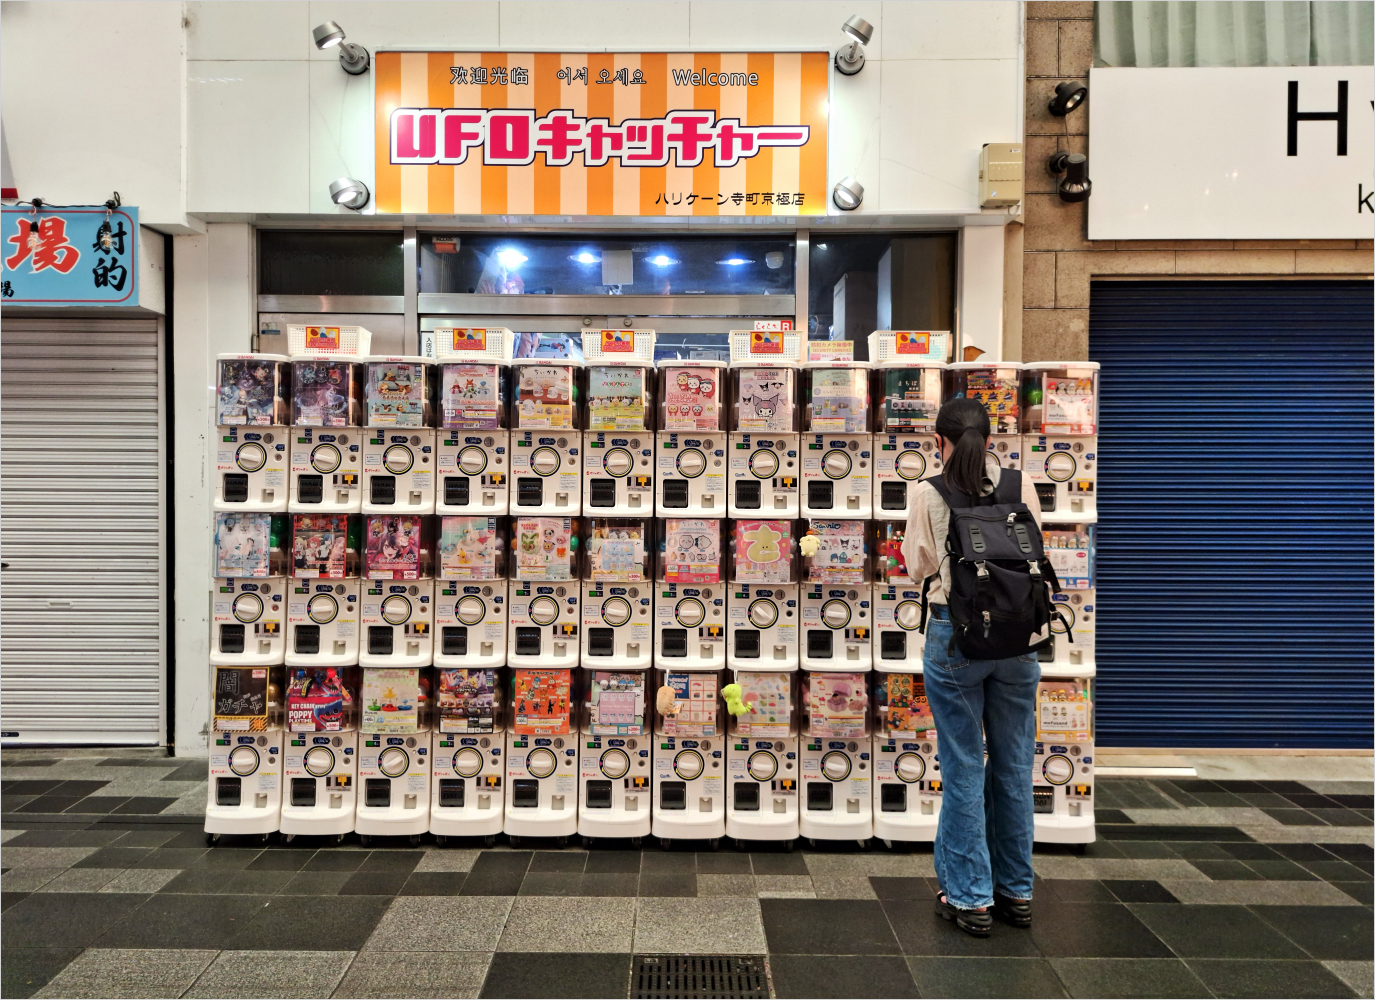 japanische Eigenheiten . Automaten